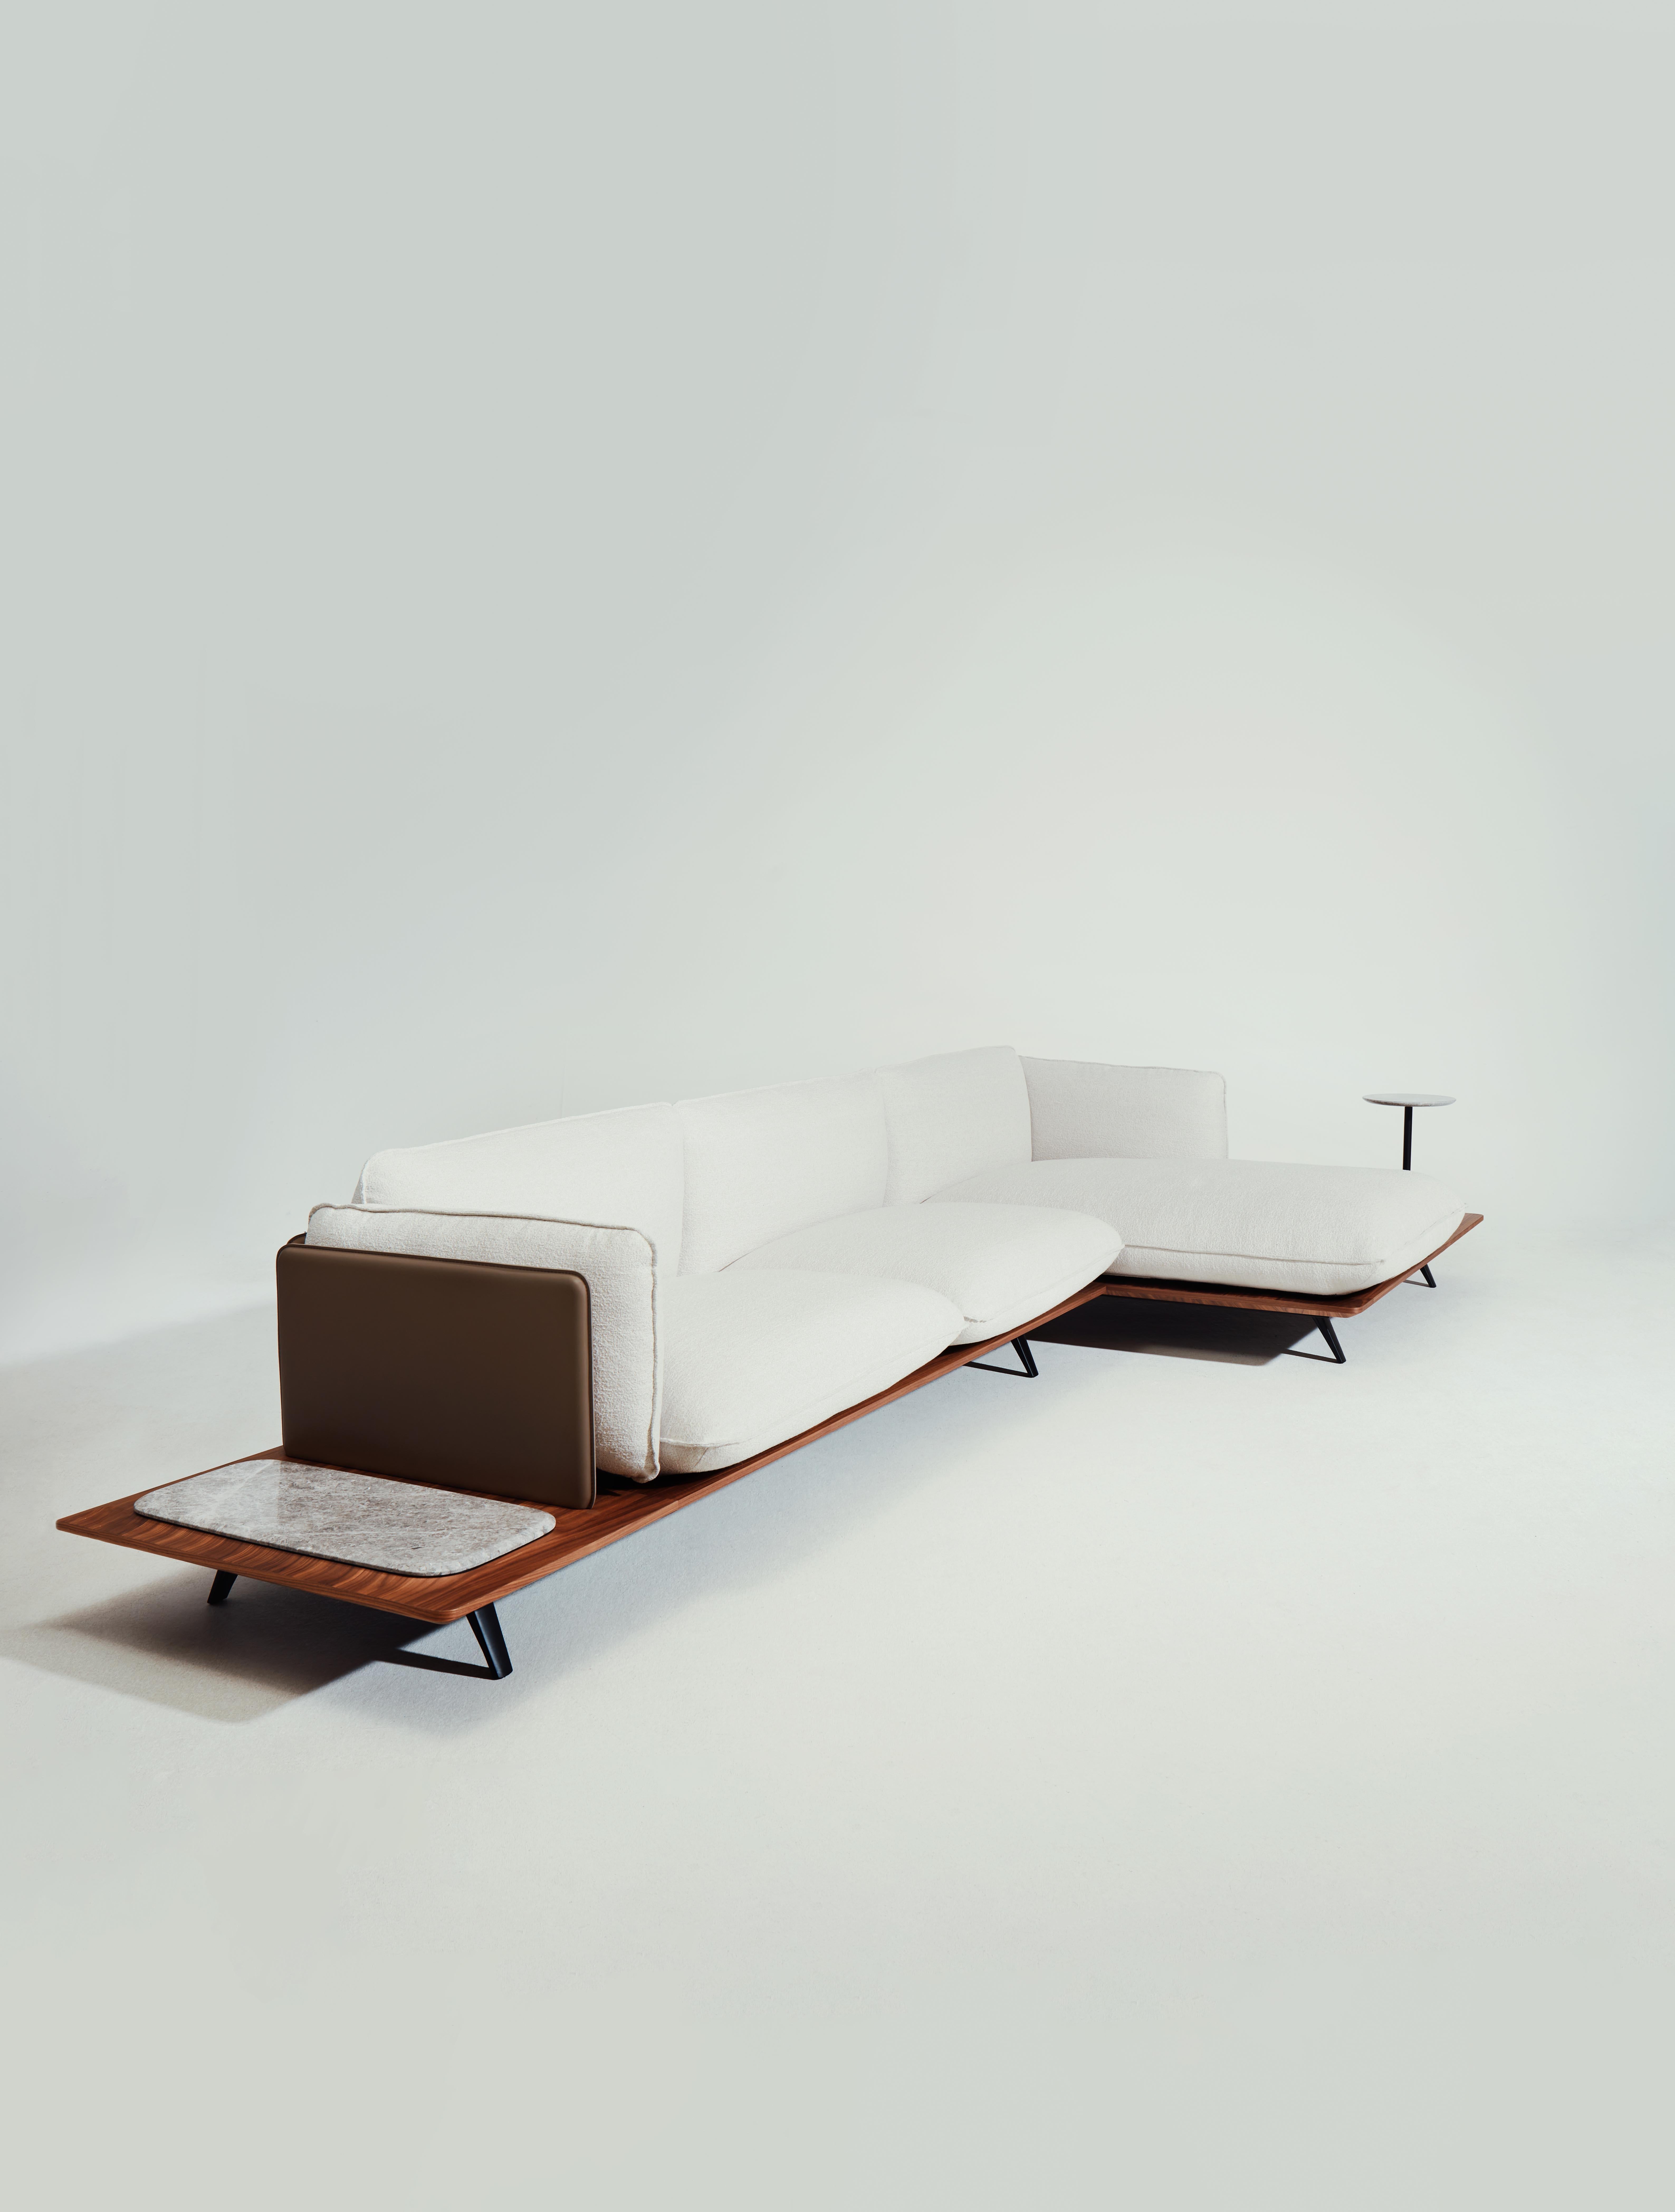 Aluminum Sahara Sofa by Noé Duchaufour Lawrance